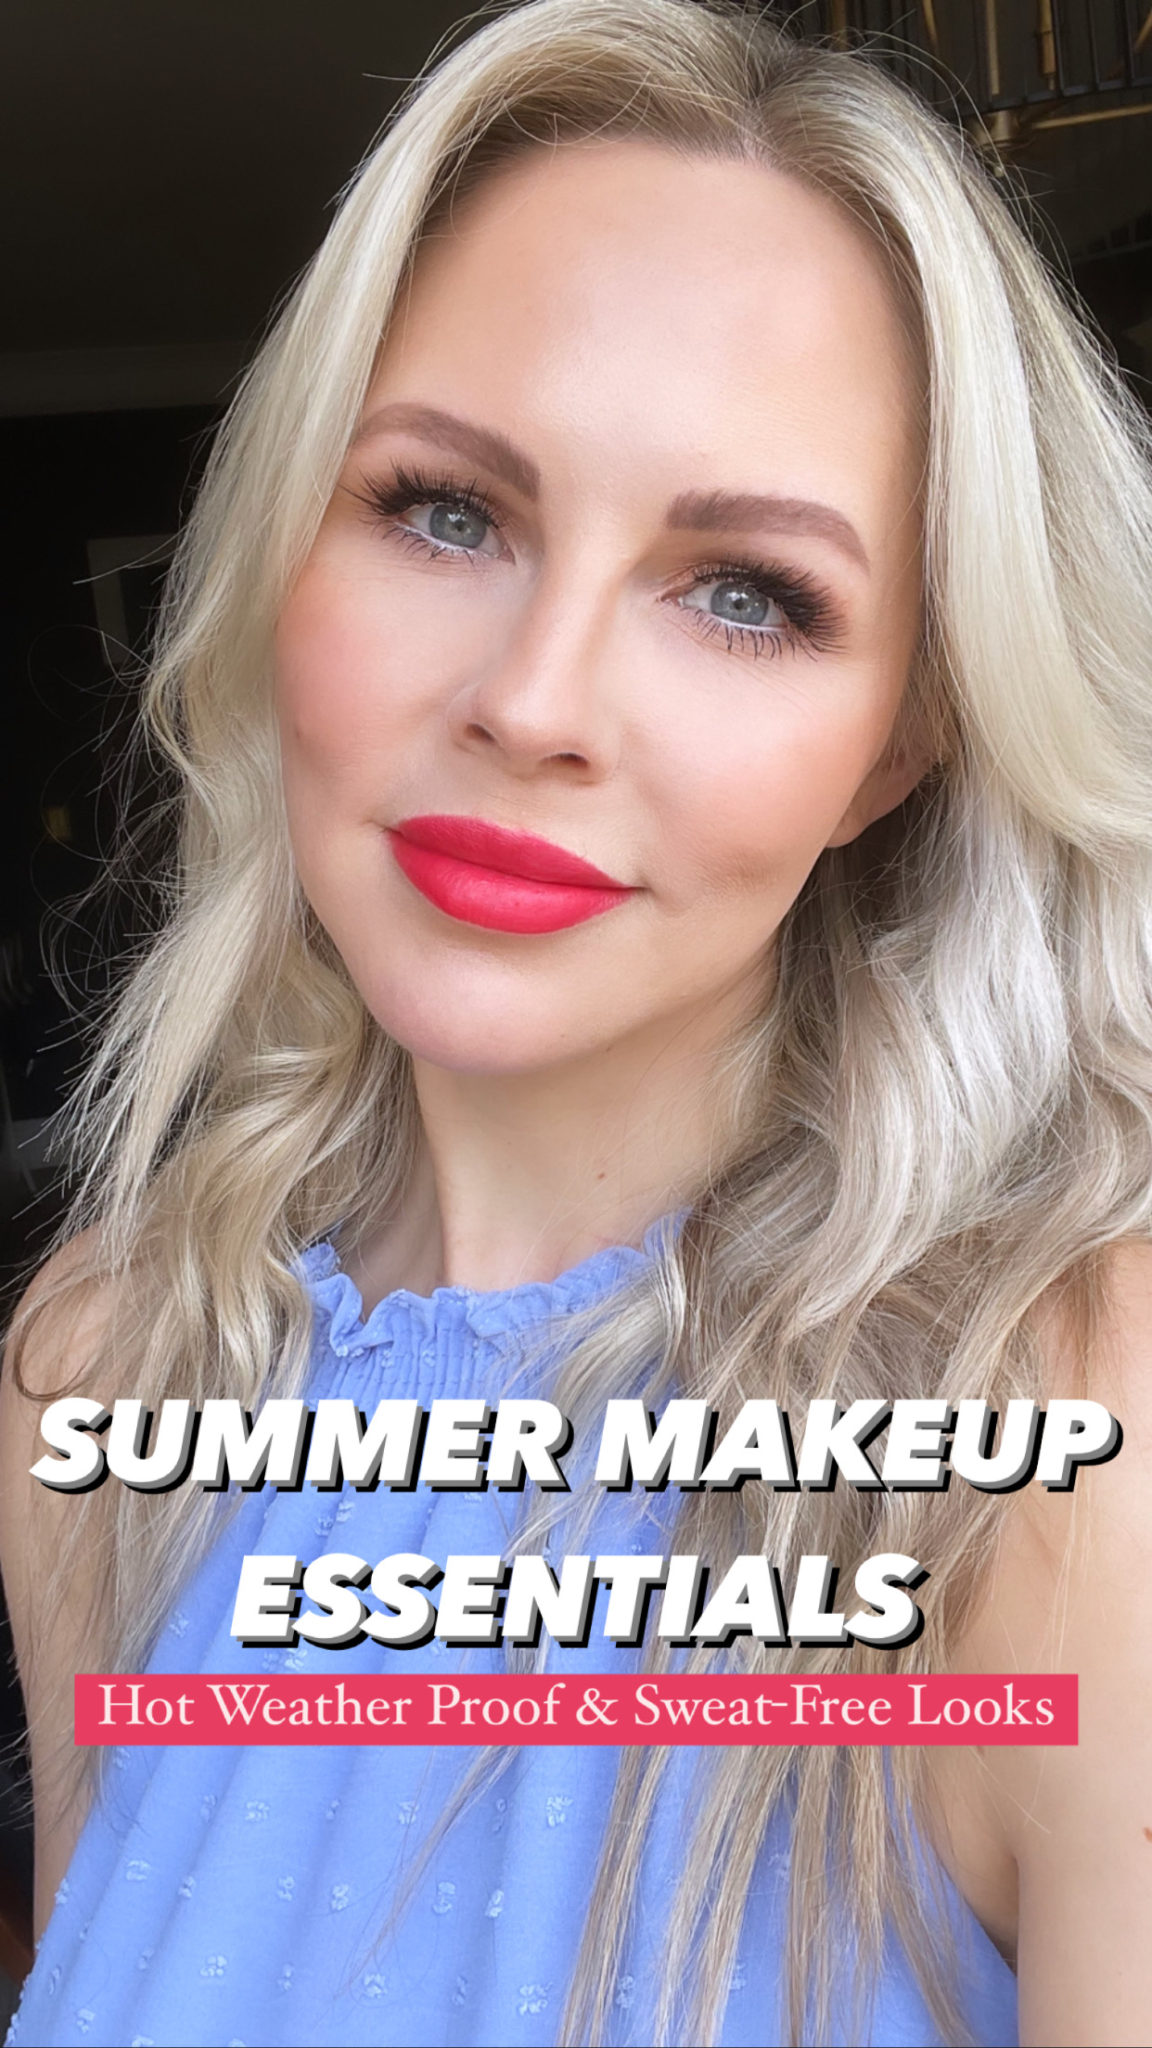 Top Nashville Lifestyle blogger shares her summer makeup essentials